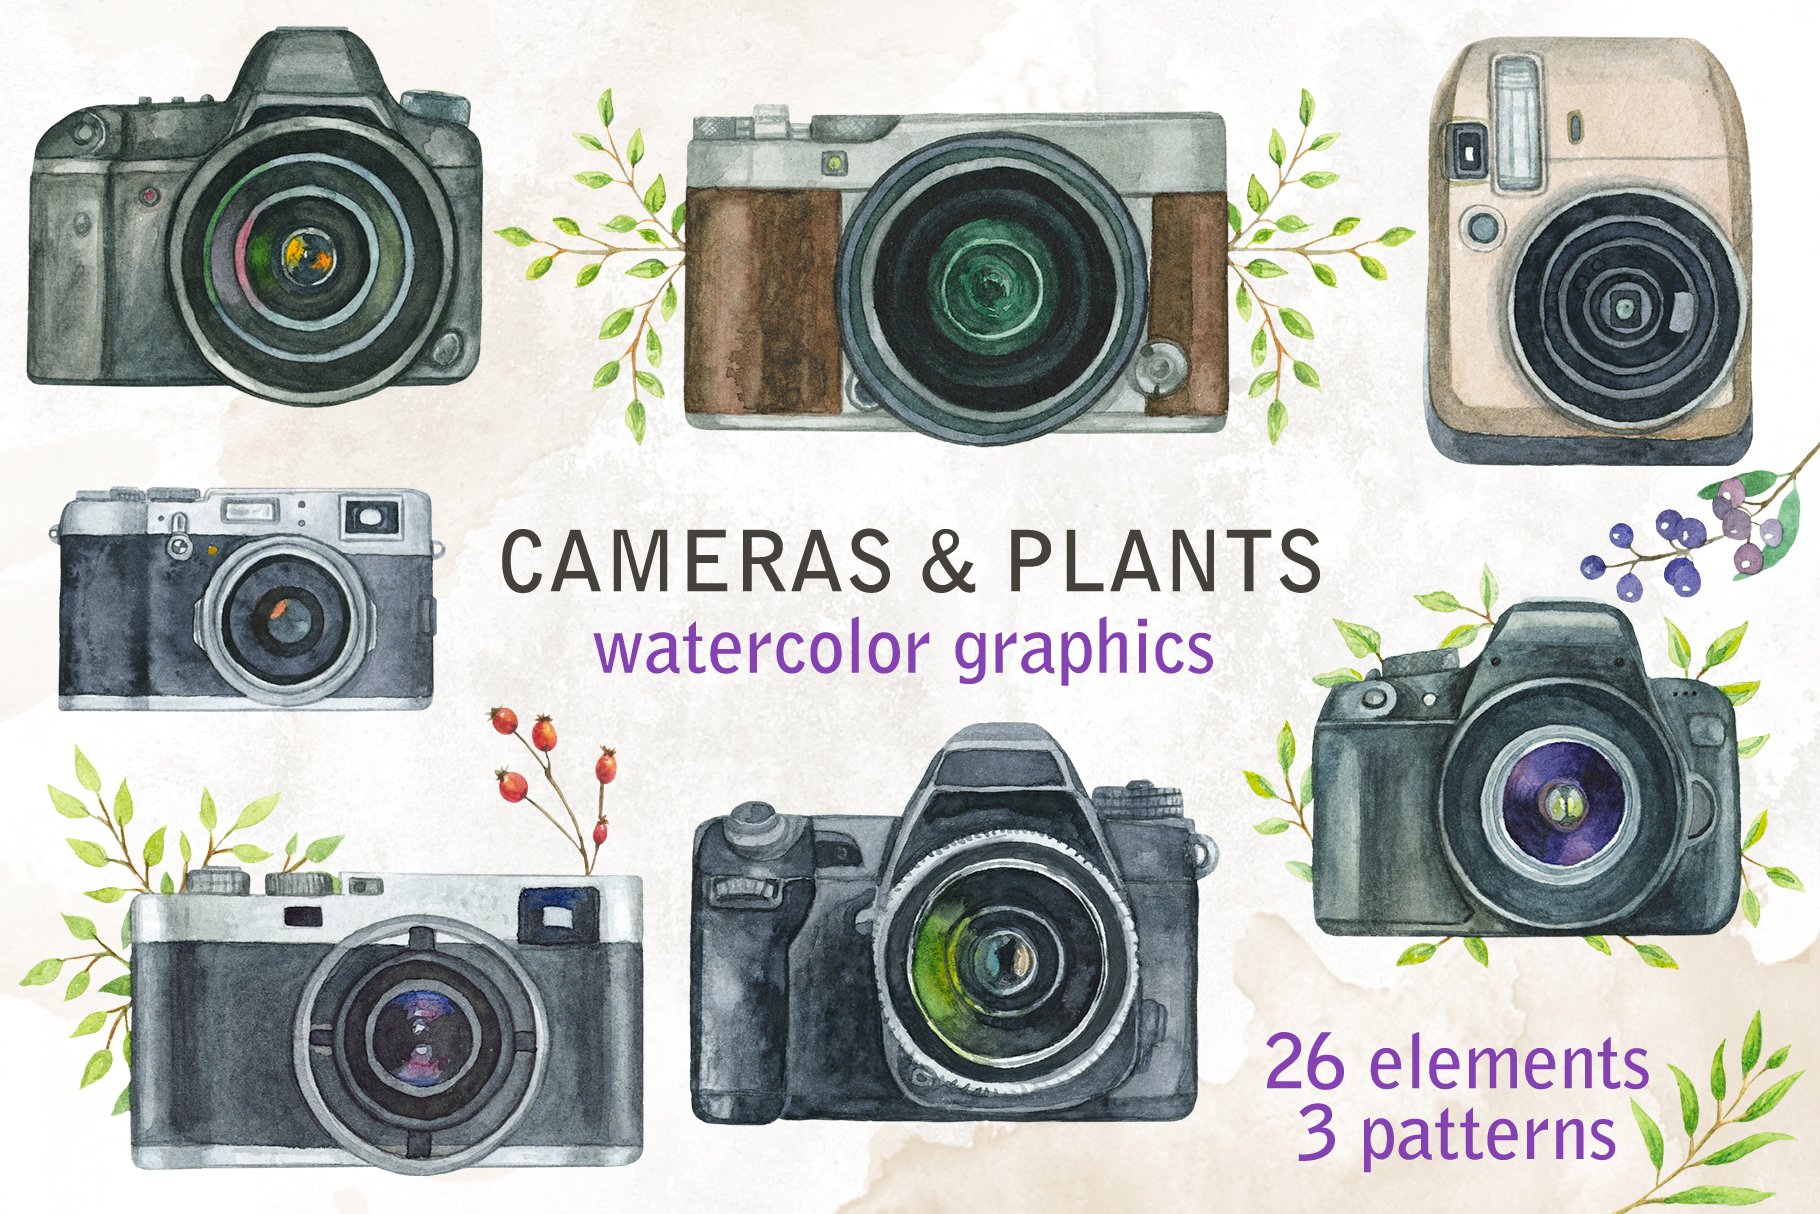 Cameras & plants. Watercolor set cover image.